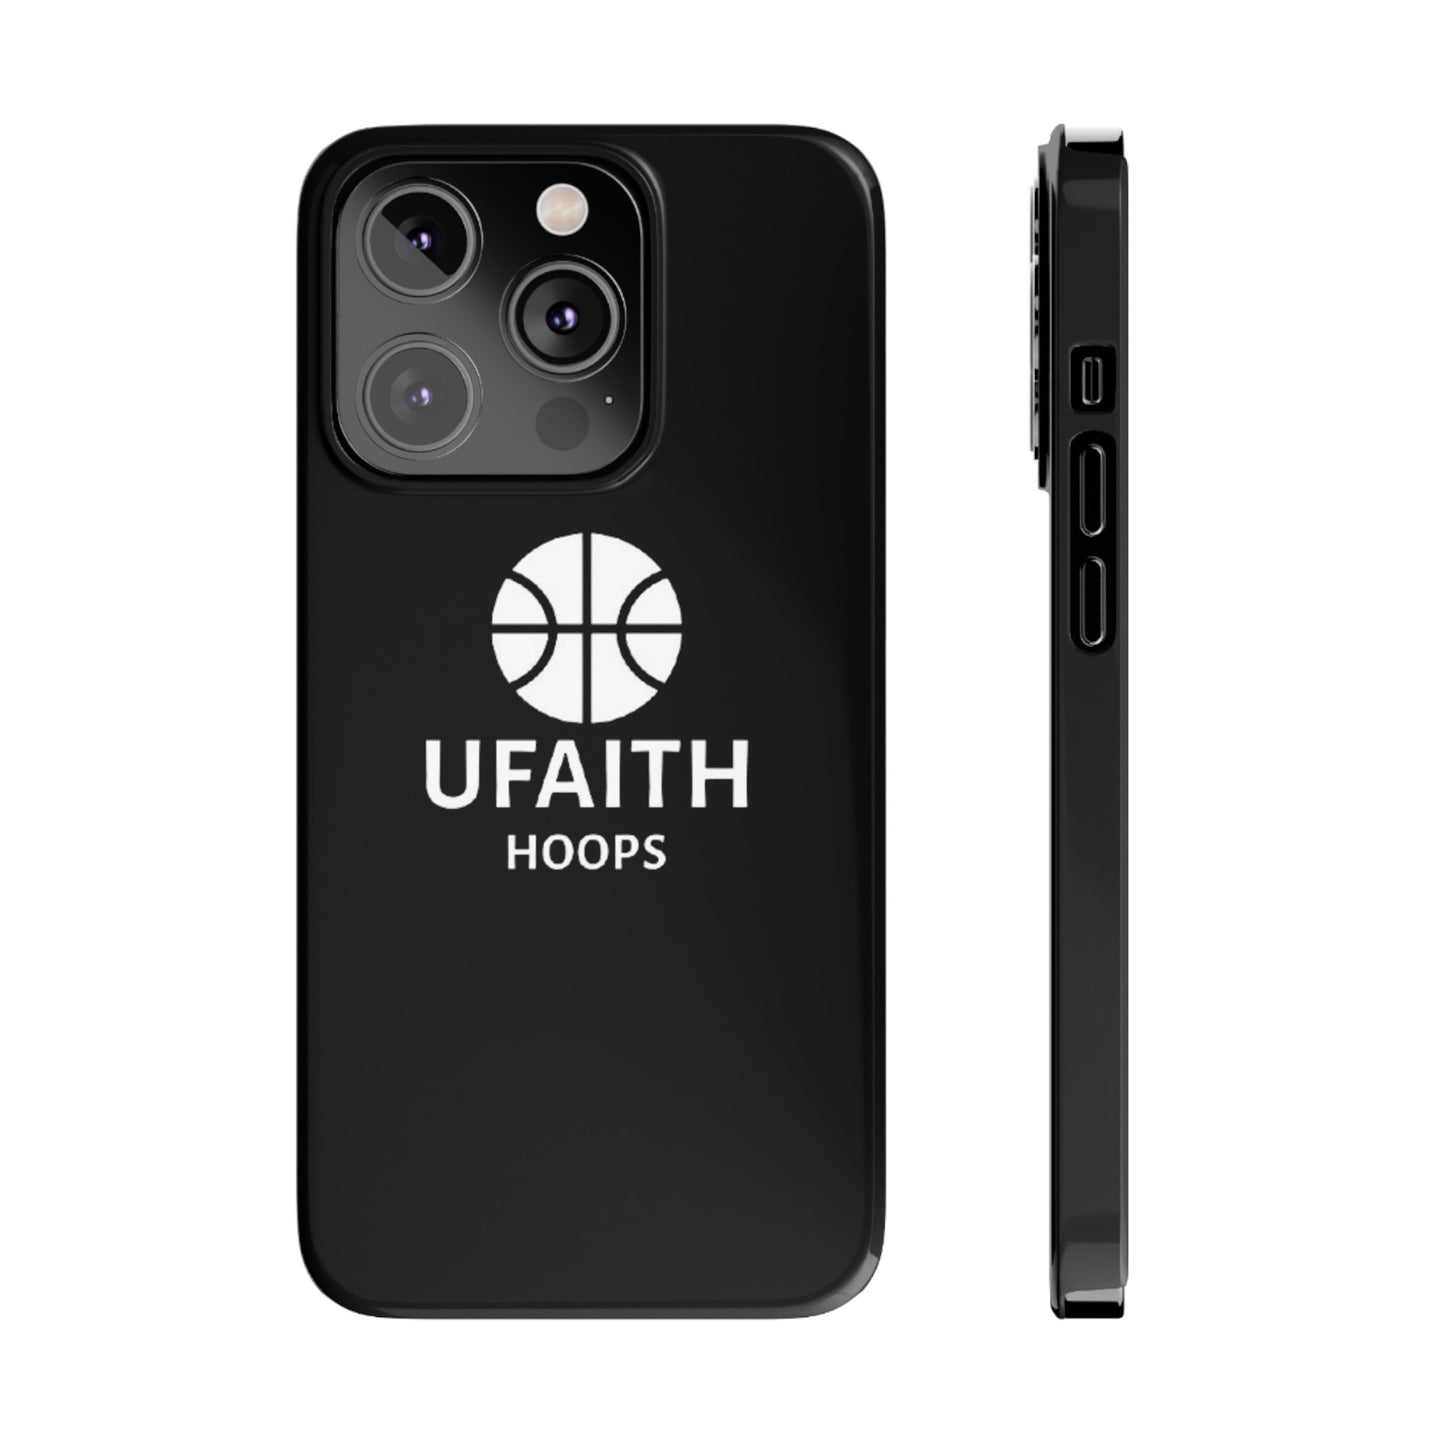 UFaith Hoops iPhone Cases